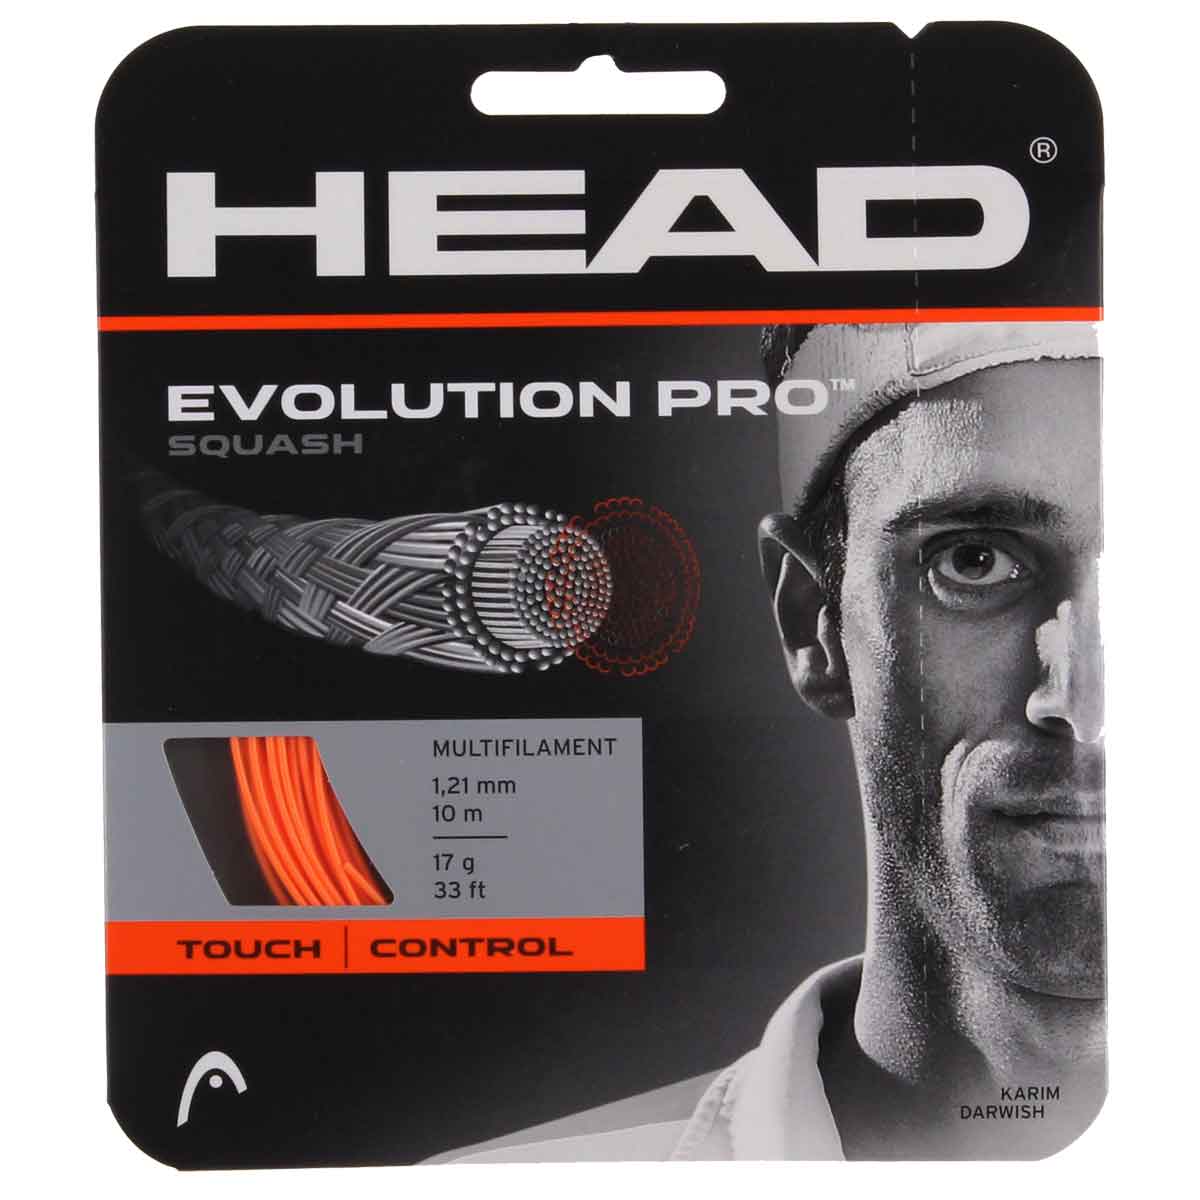 Head Evolution Pro Squash String 17L - 1.21 MM (Orange) - Best Price online Prokicksports.com